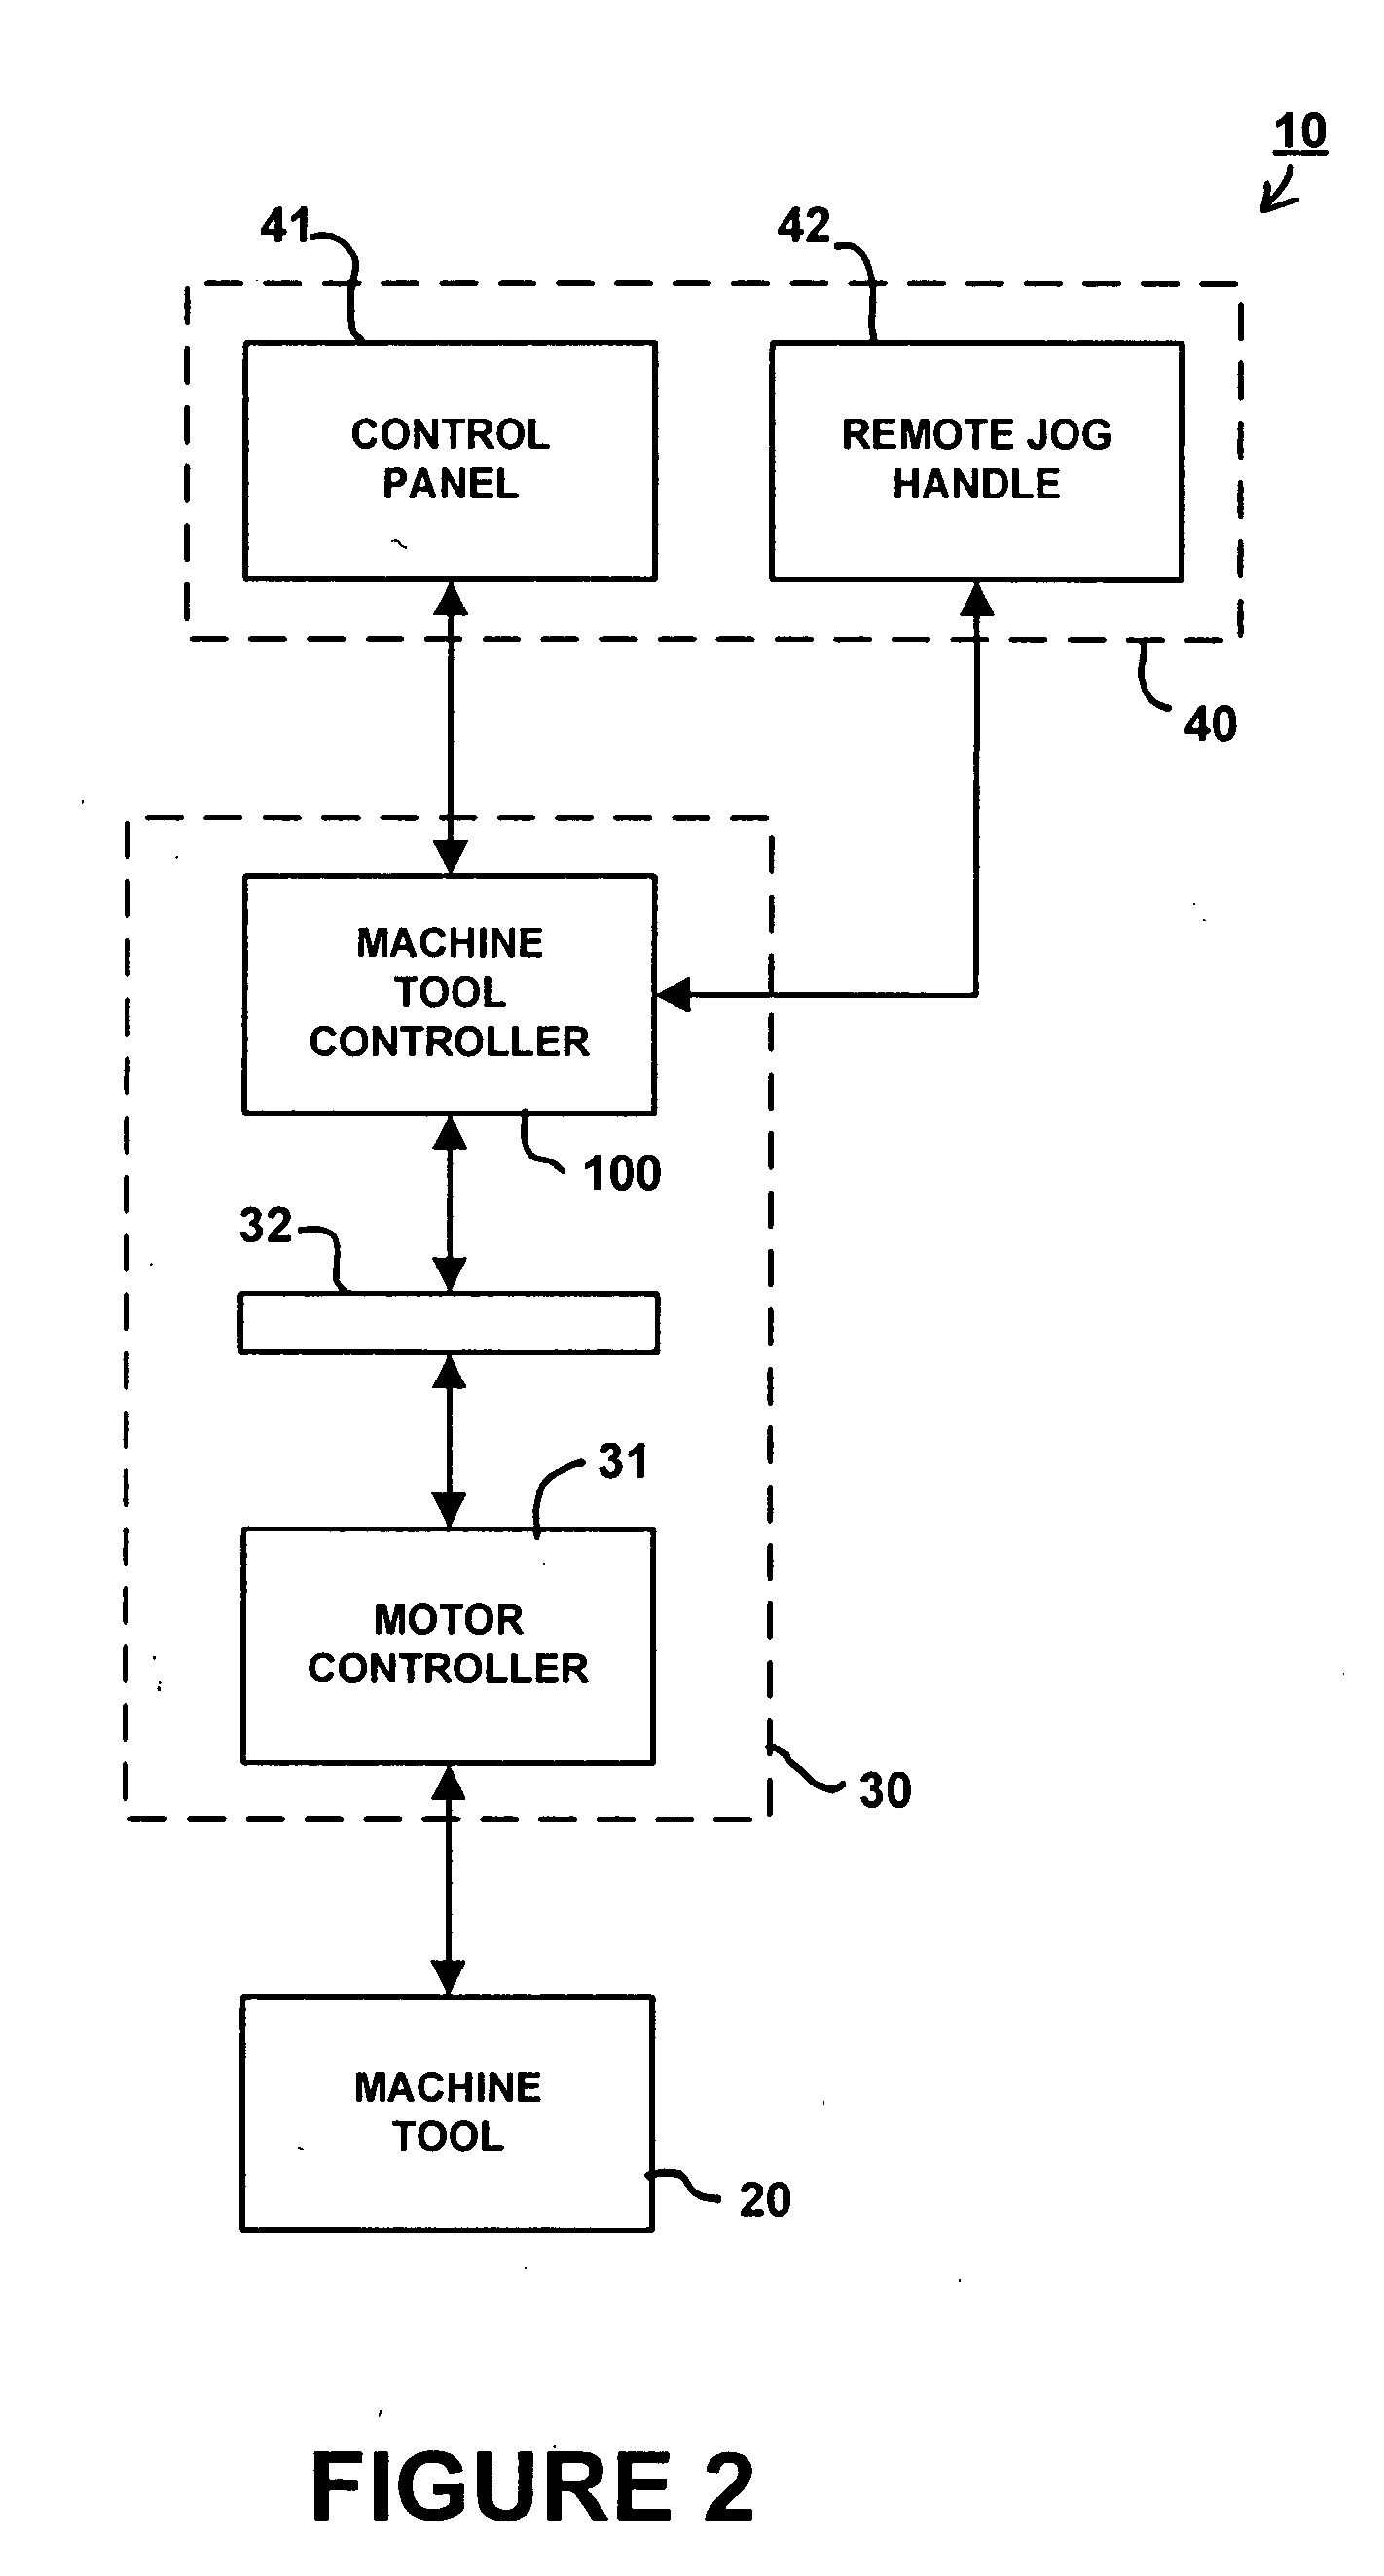 Machine tool control system